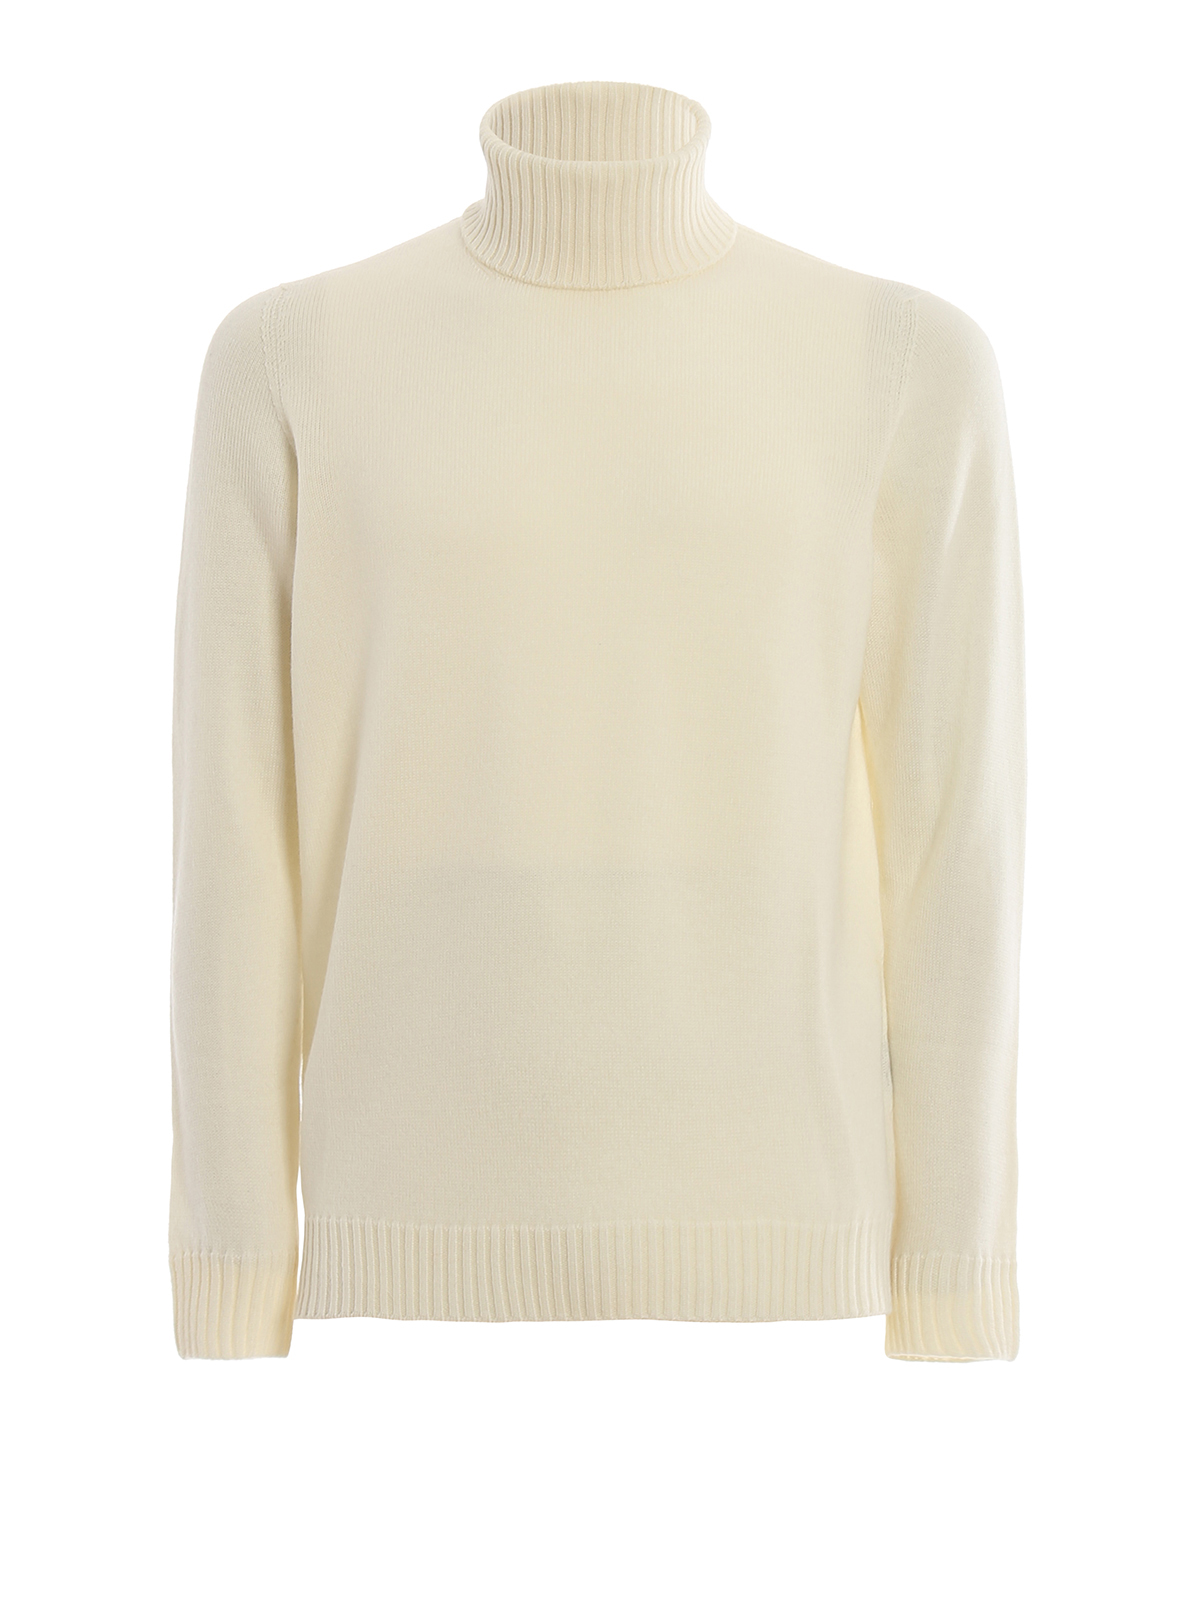 Drumohr White Merino Wool Turtleneck Sweater